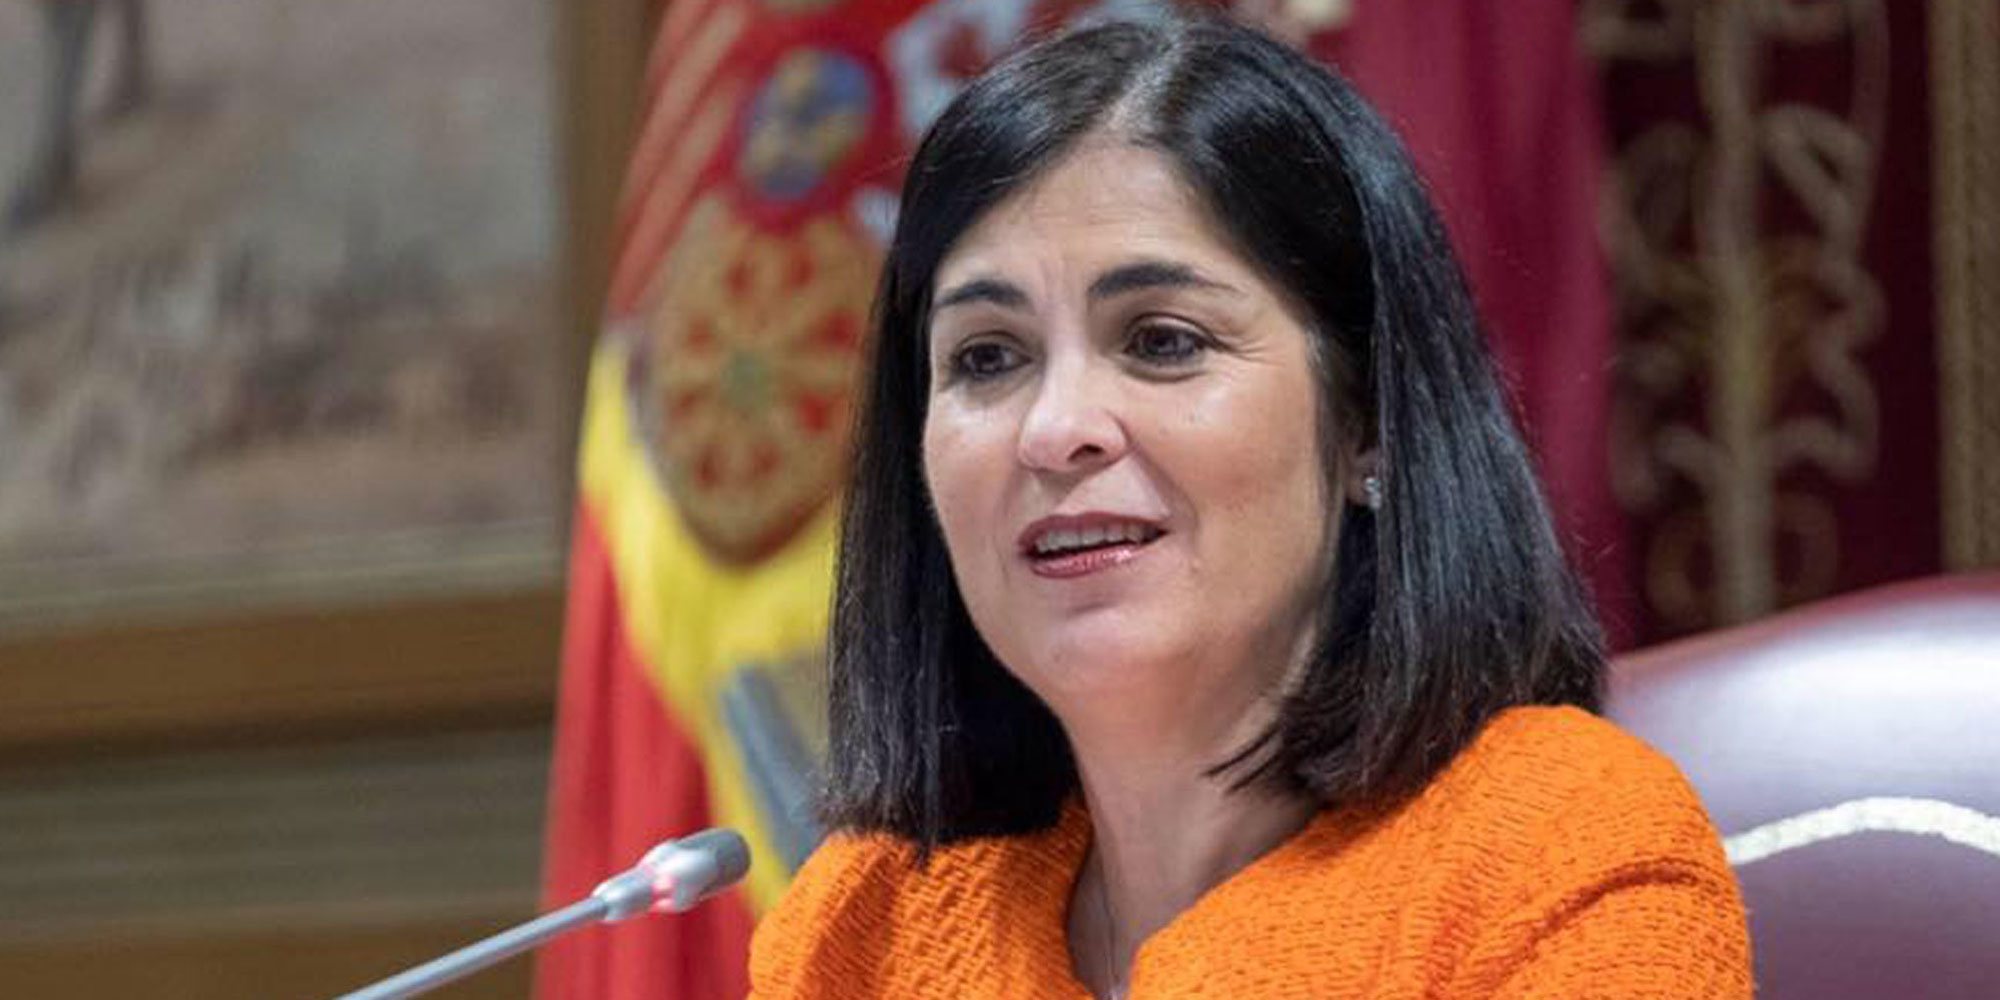 La Ministra Carolina Darias vuelve a dar positivo en coronavirus